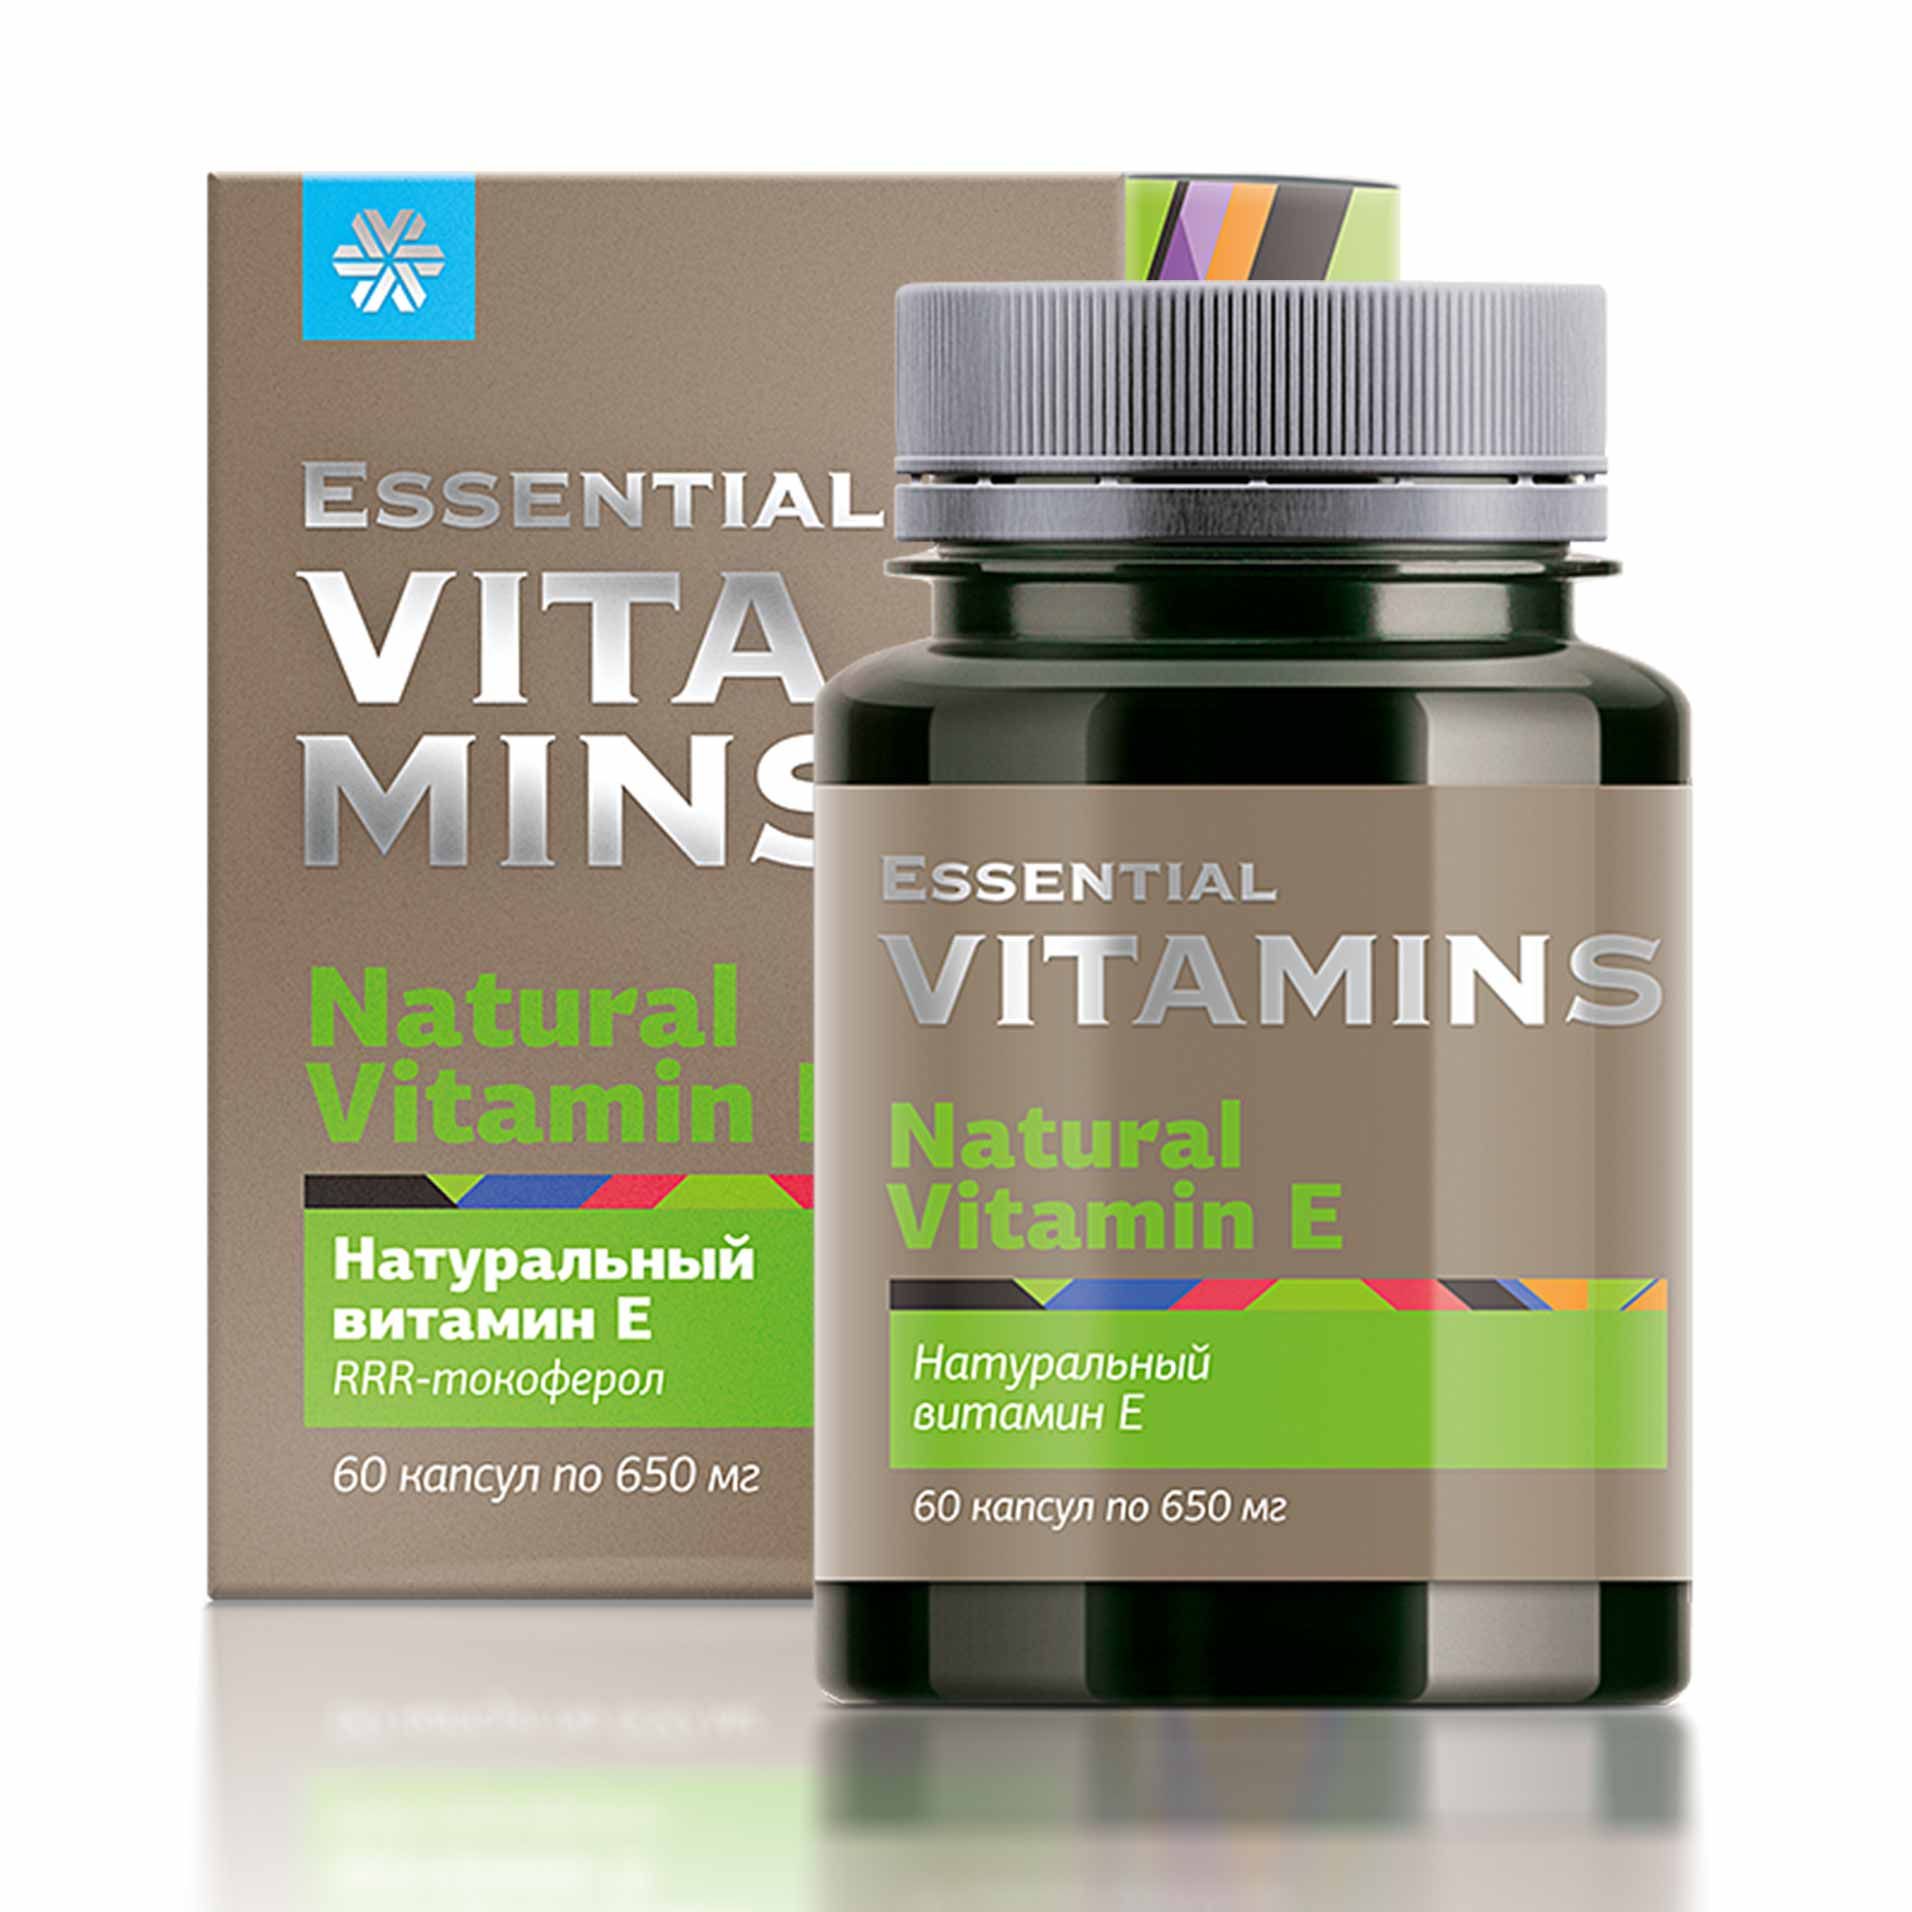 Essential Vitamins - Натуральный витамин E